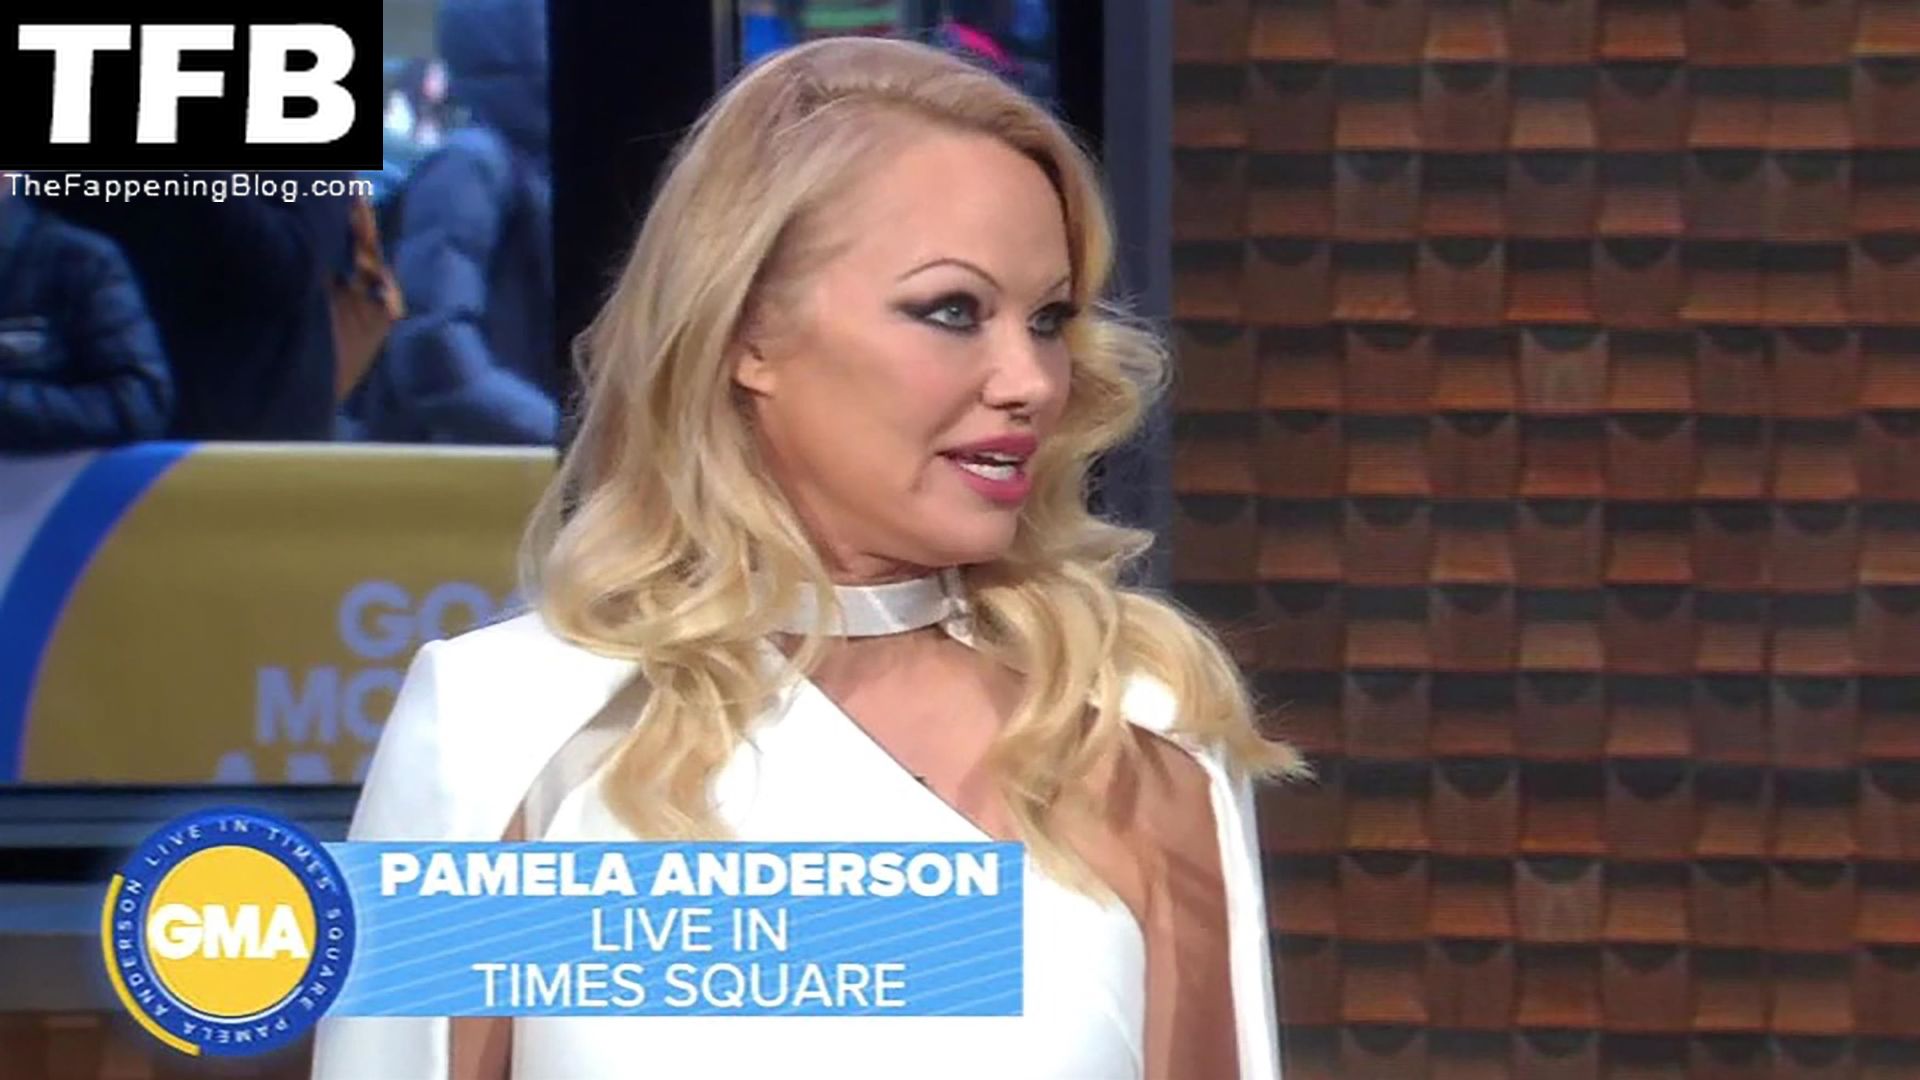 Pamela-Anderson-Hot-The-Fappening-Blog-22.jpg